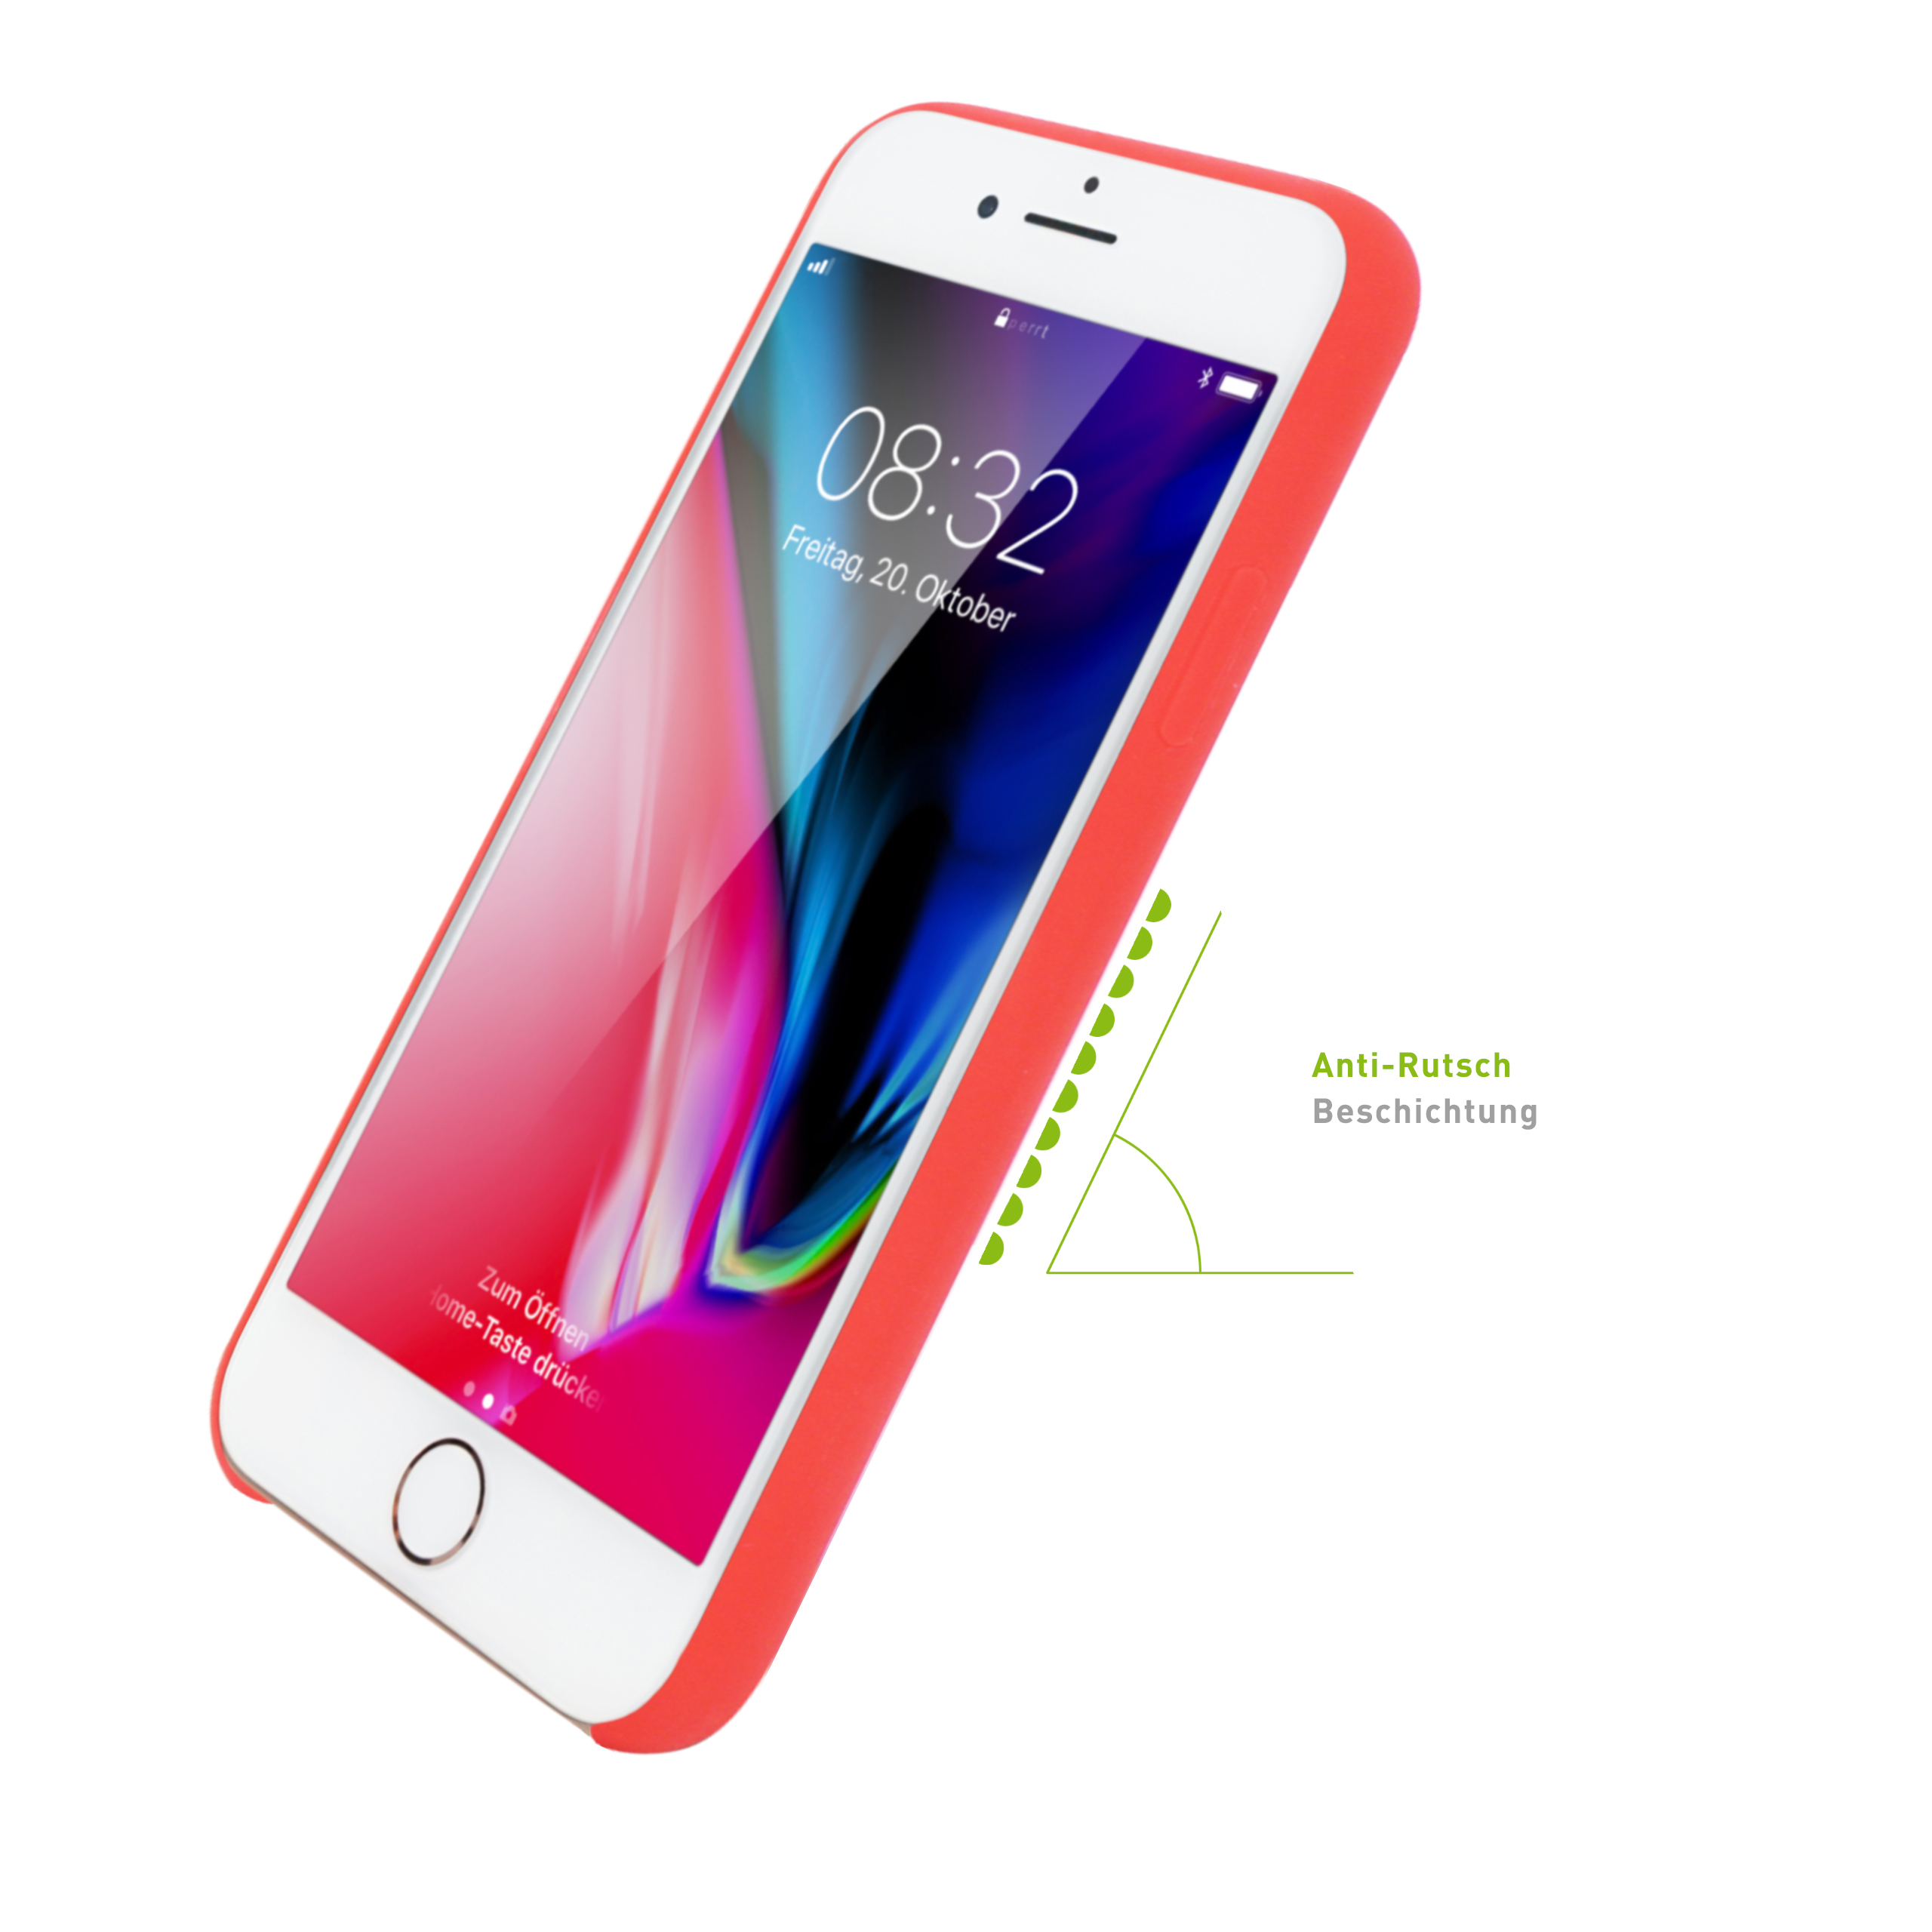 Schutzhülle Apple, Red, Plus Silikon red KMP Backcover, 8 für 8 iPhone Plus, iPhone